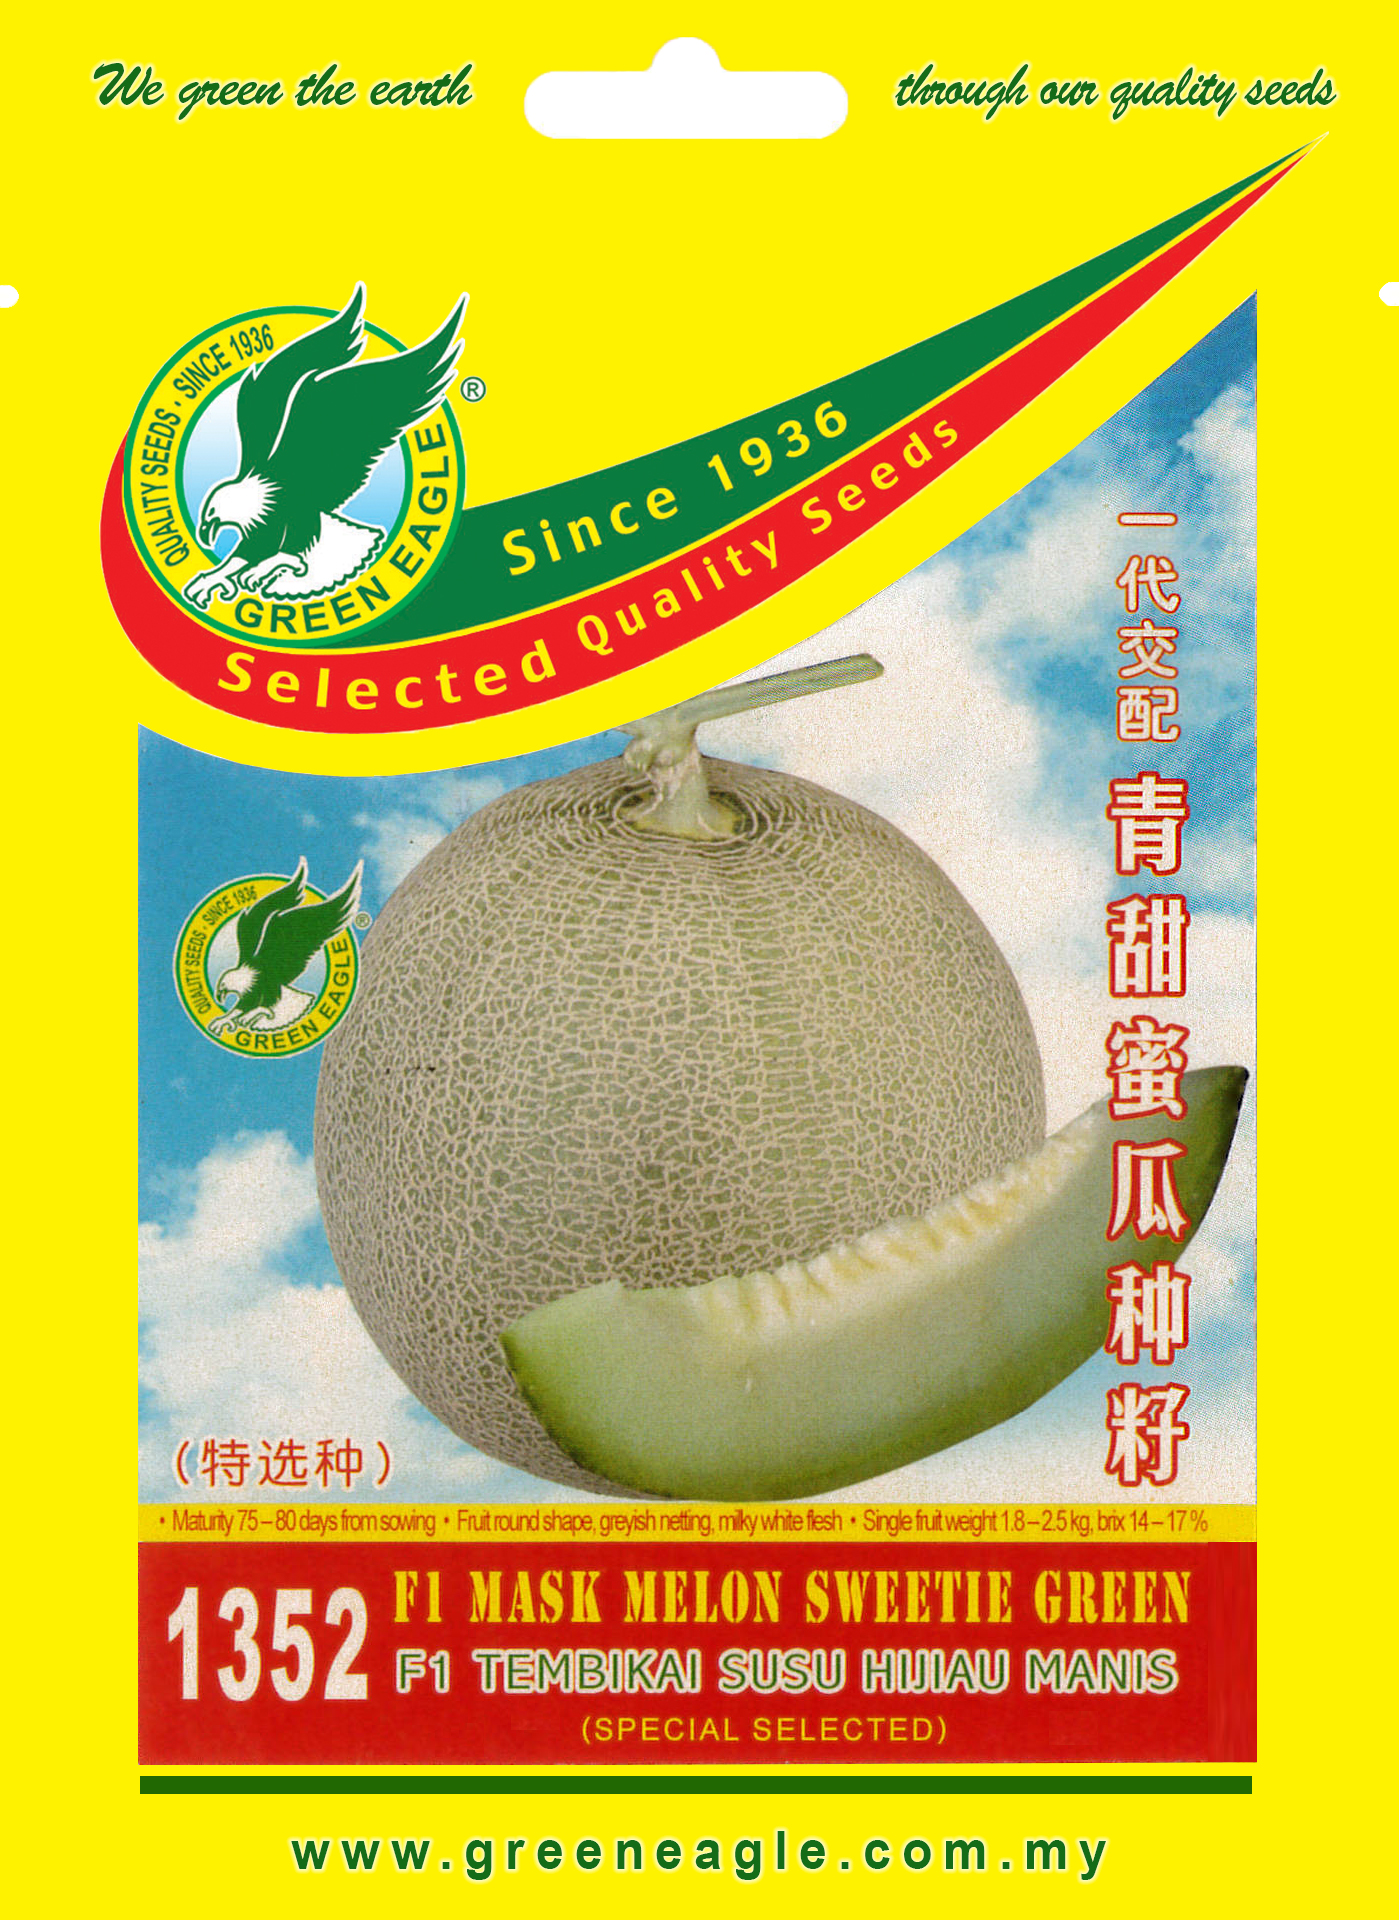 1352 F1 Mask Melon Sweetie Green